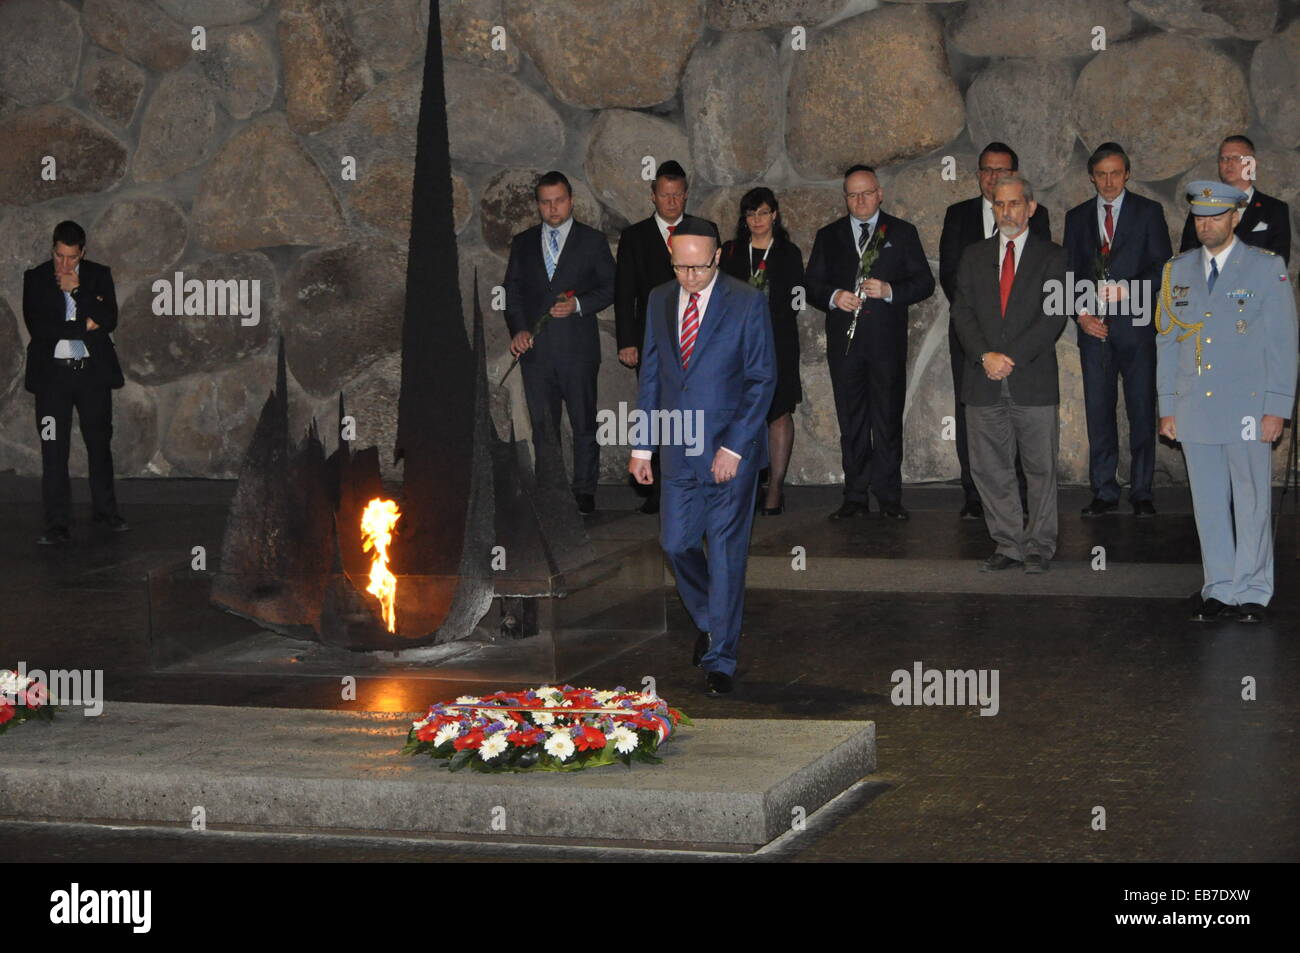 Czech Prime Minister Bohuslav Sobotka (front) visits the Holocaust victims Yad Vashem memorial today, on Tuesday, November 25, 2014. Jerusalem, Israel © Sarka Dvorakova/CTK Photo/Alamy Live News Stock Photo